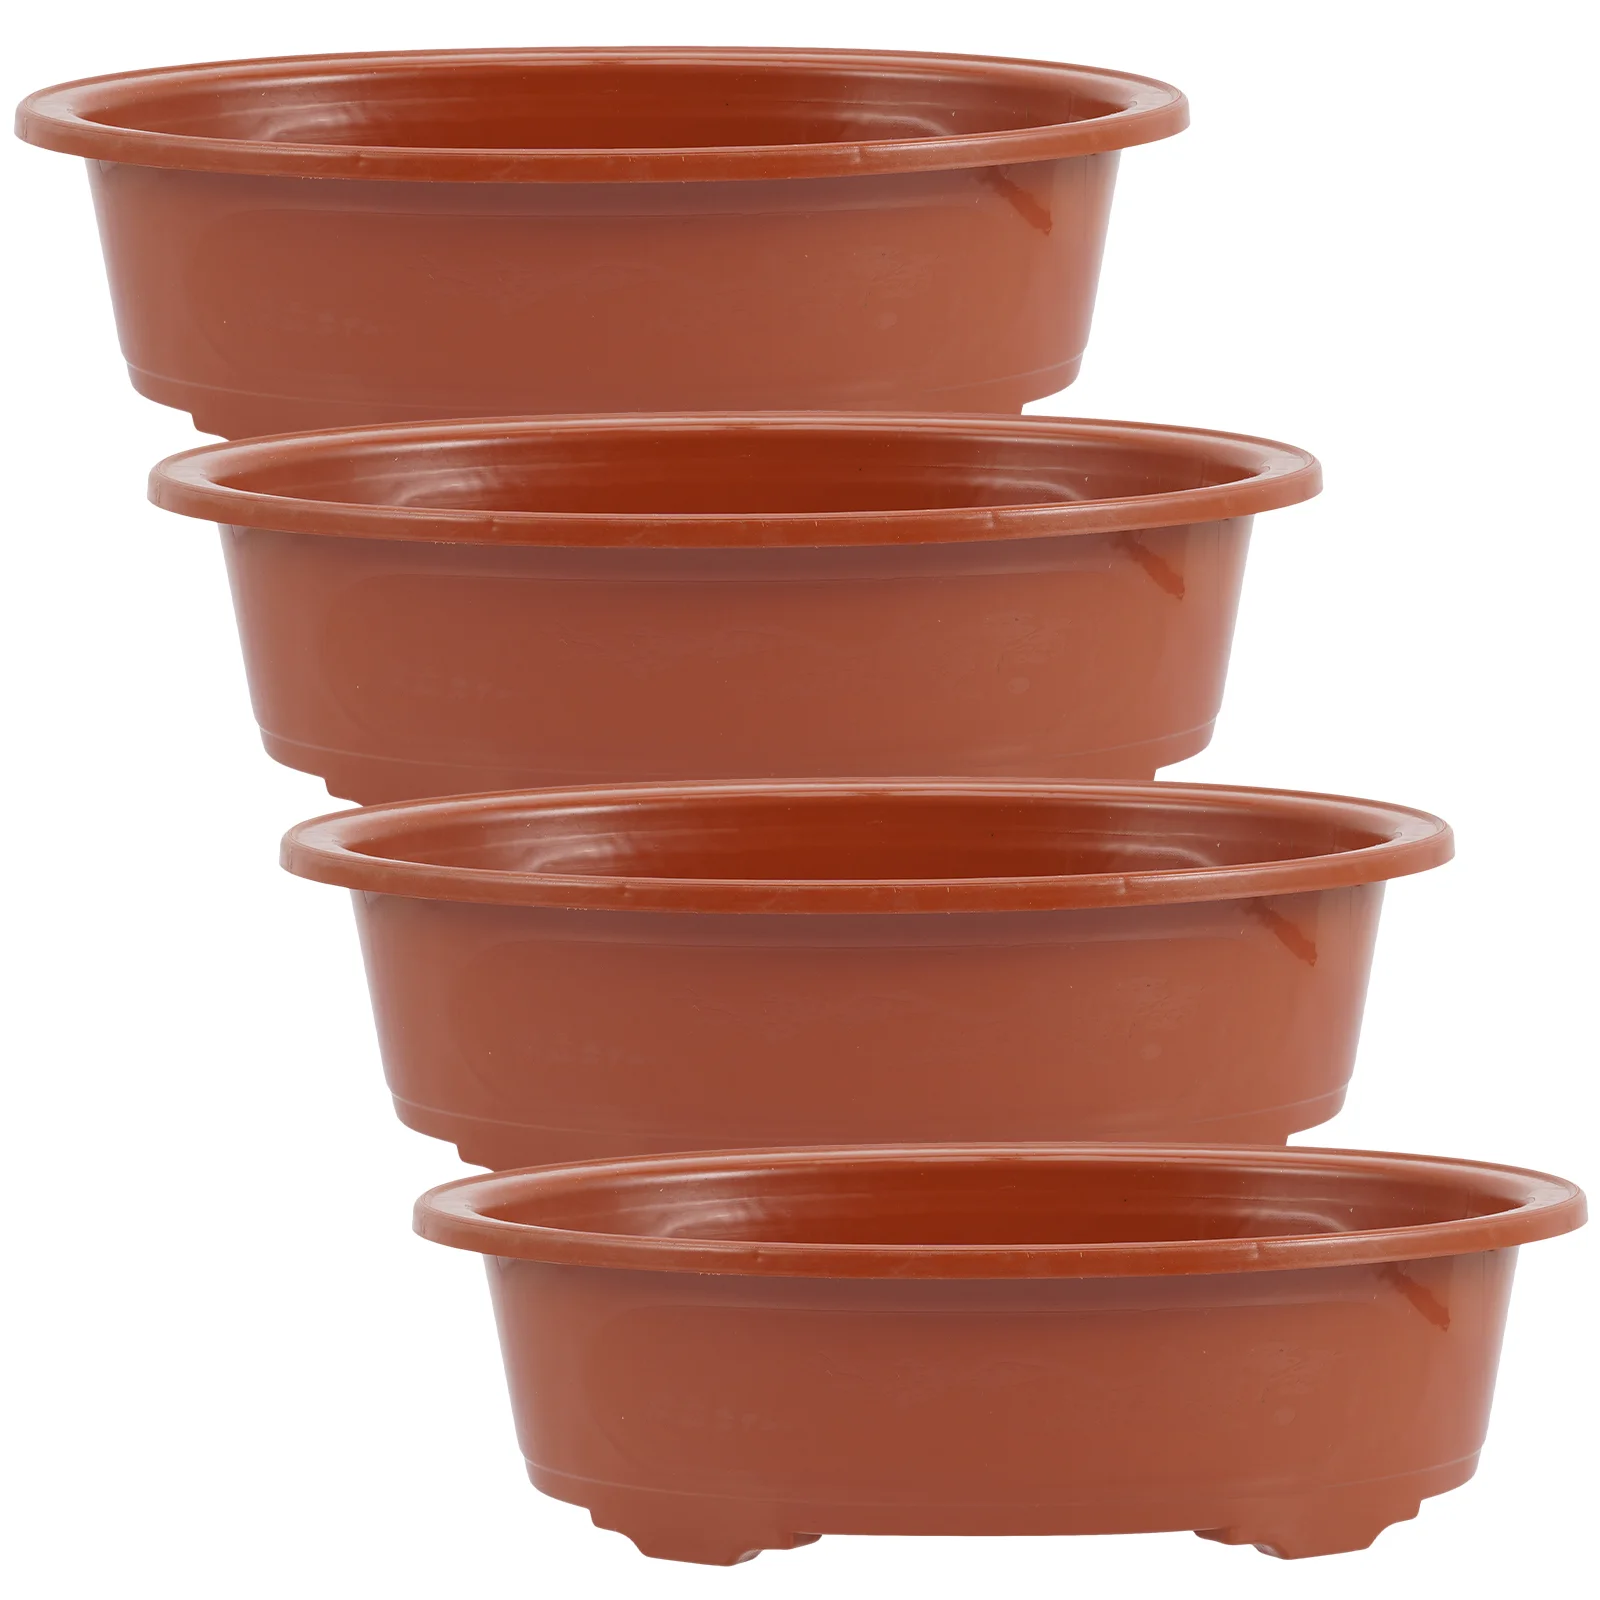 4 Pcs Plastic Flower Pot Indoor Pots Planter Plants Outdoors Planting Household Garden Big Flowerpot Home Bonsai